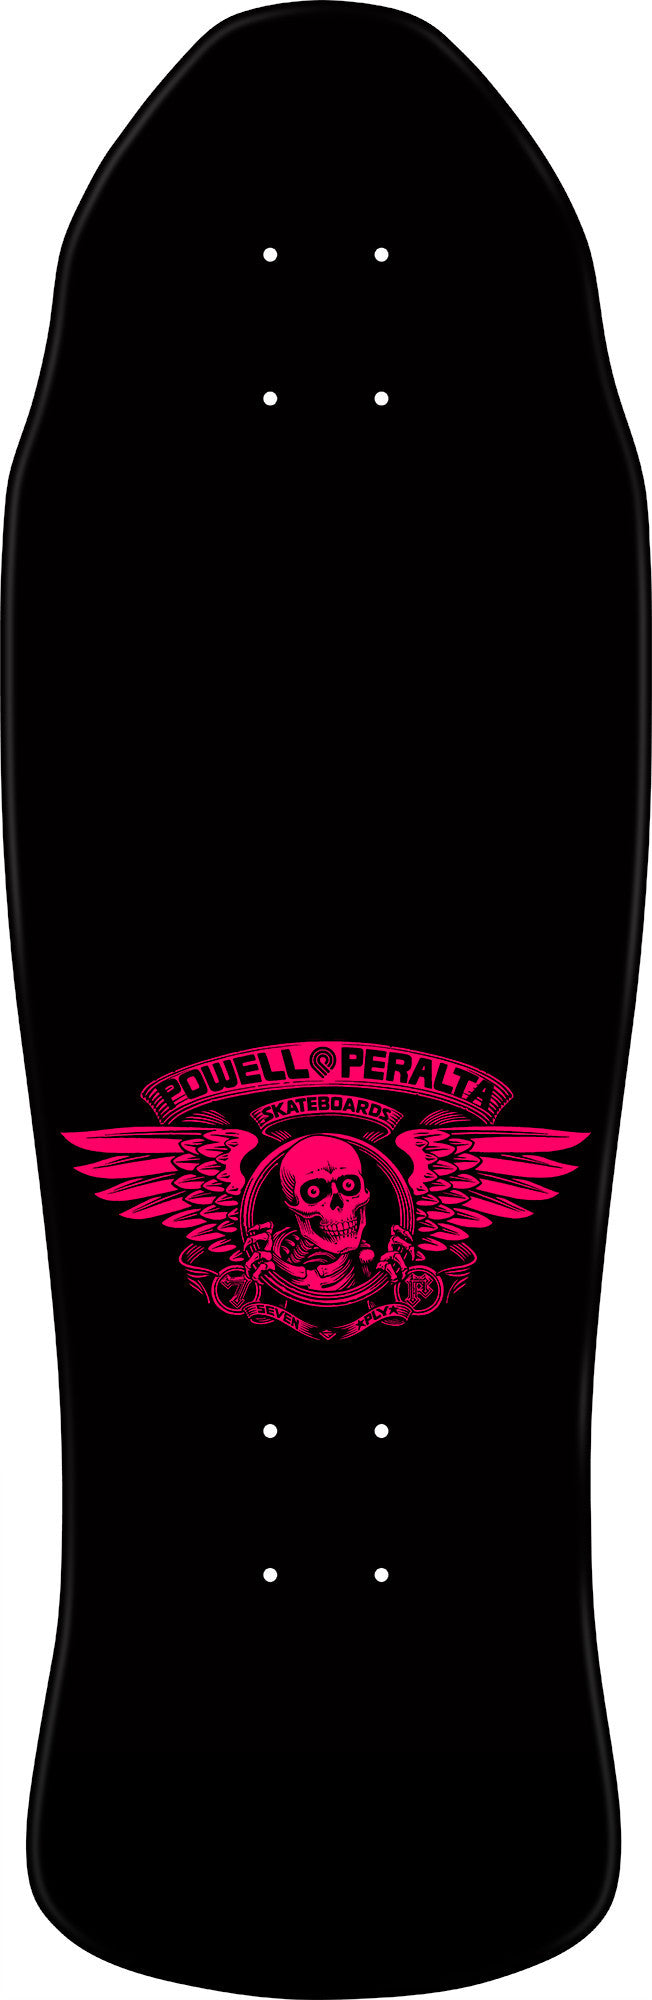 Powell Peralta Steve Caballero Street Skateboard Deck Black/Blue - 9.625 x 29.75